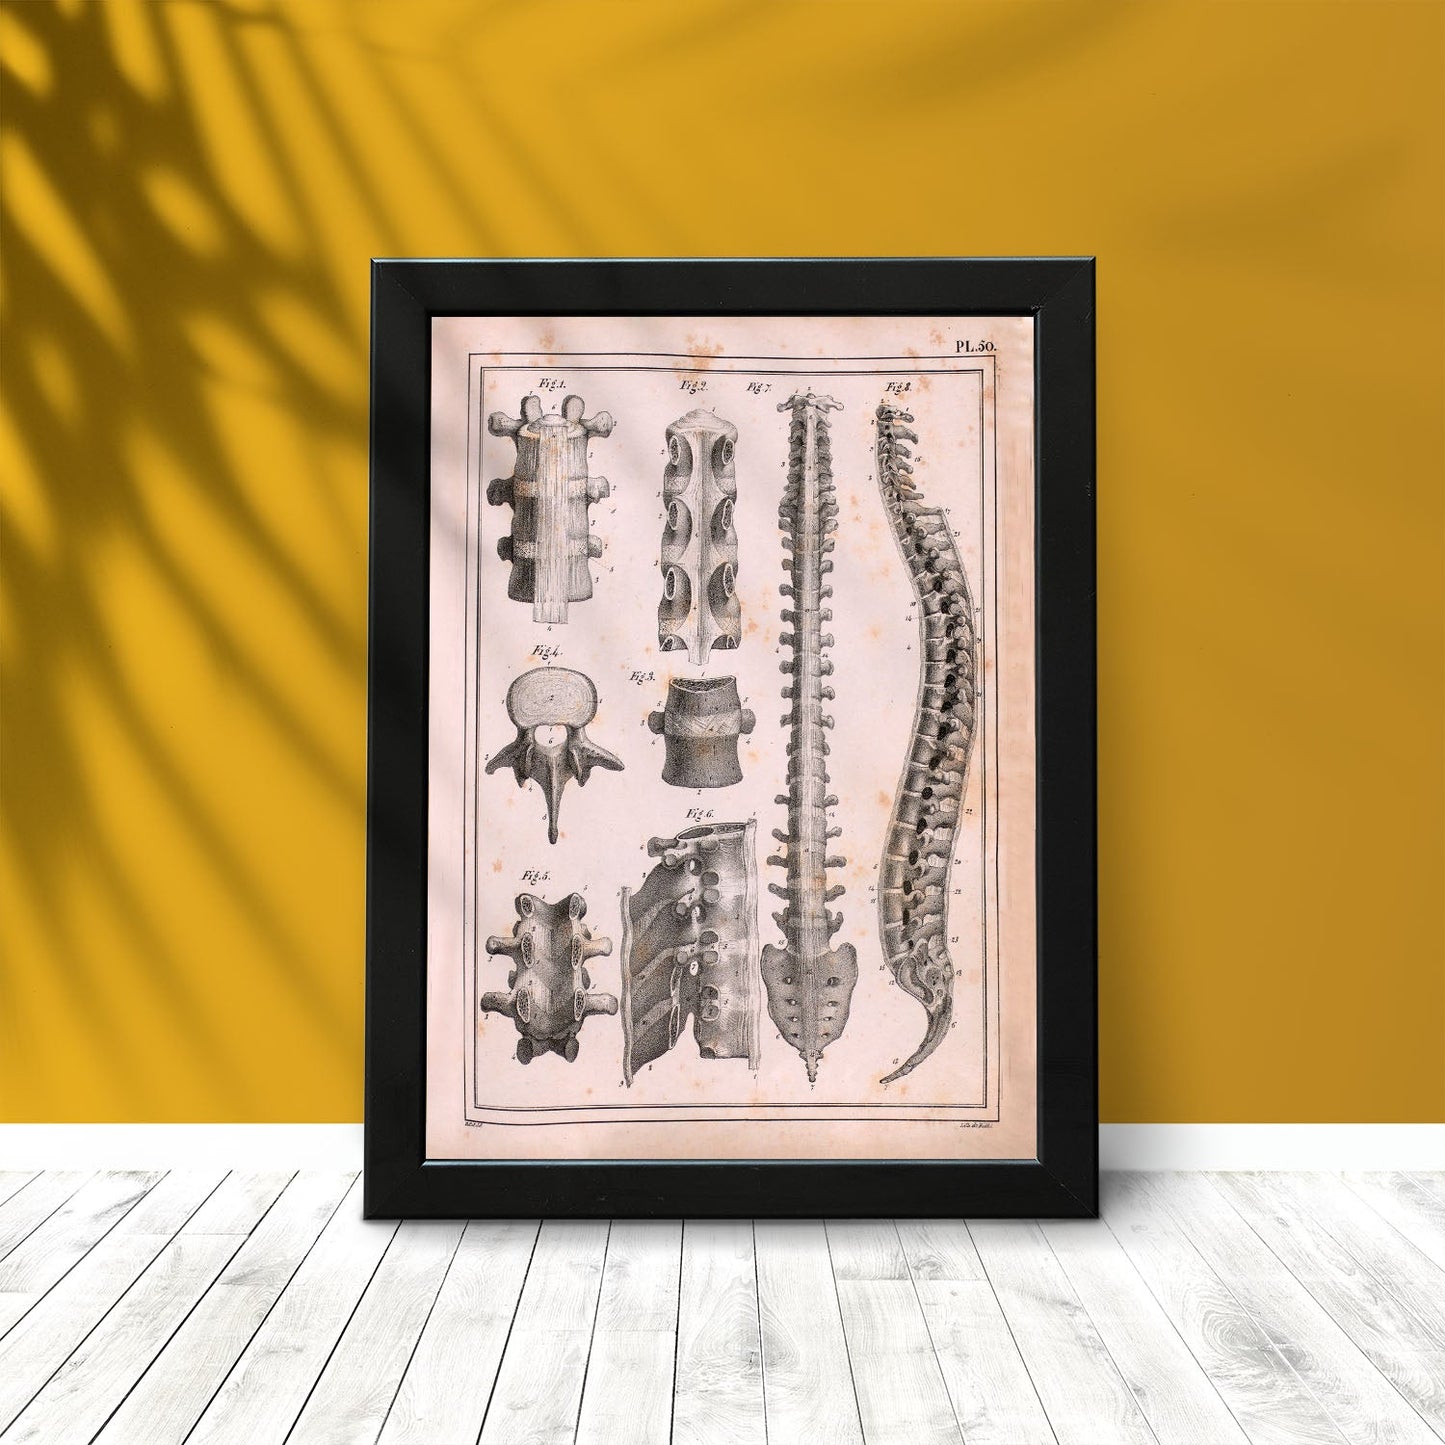 Paillou Spine; vertebrae, sacrum and coccyx with ligaments-Artwork-Nacnic-Nacnic Estudio SL